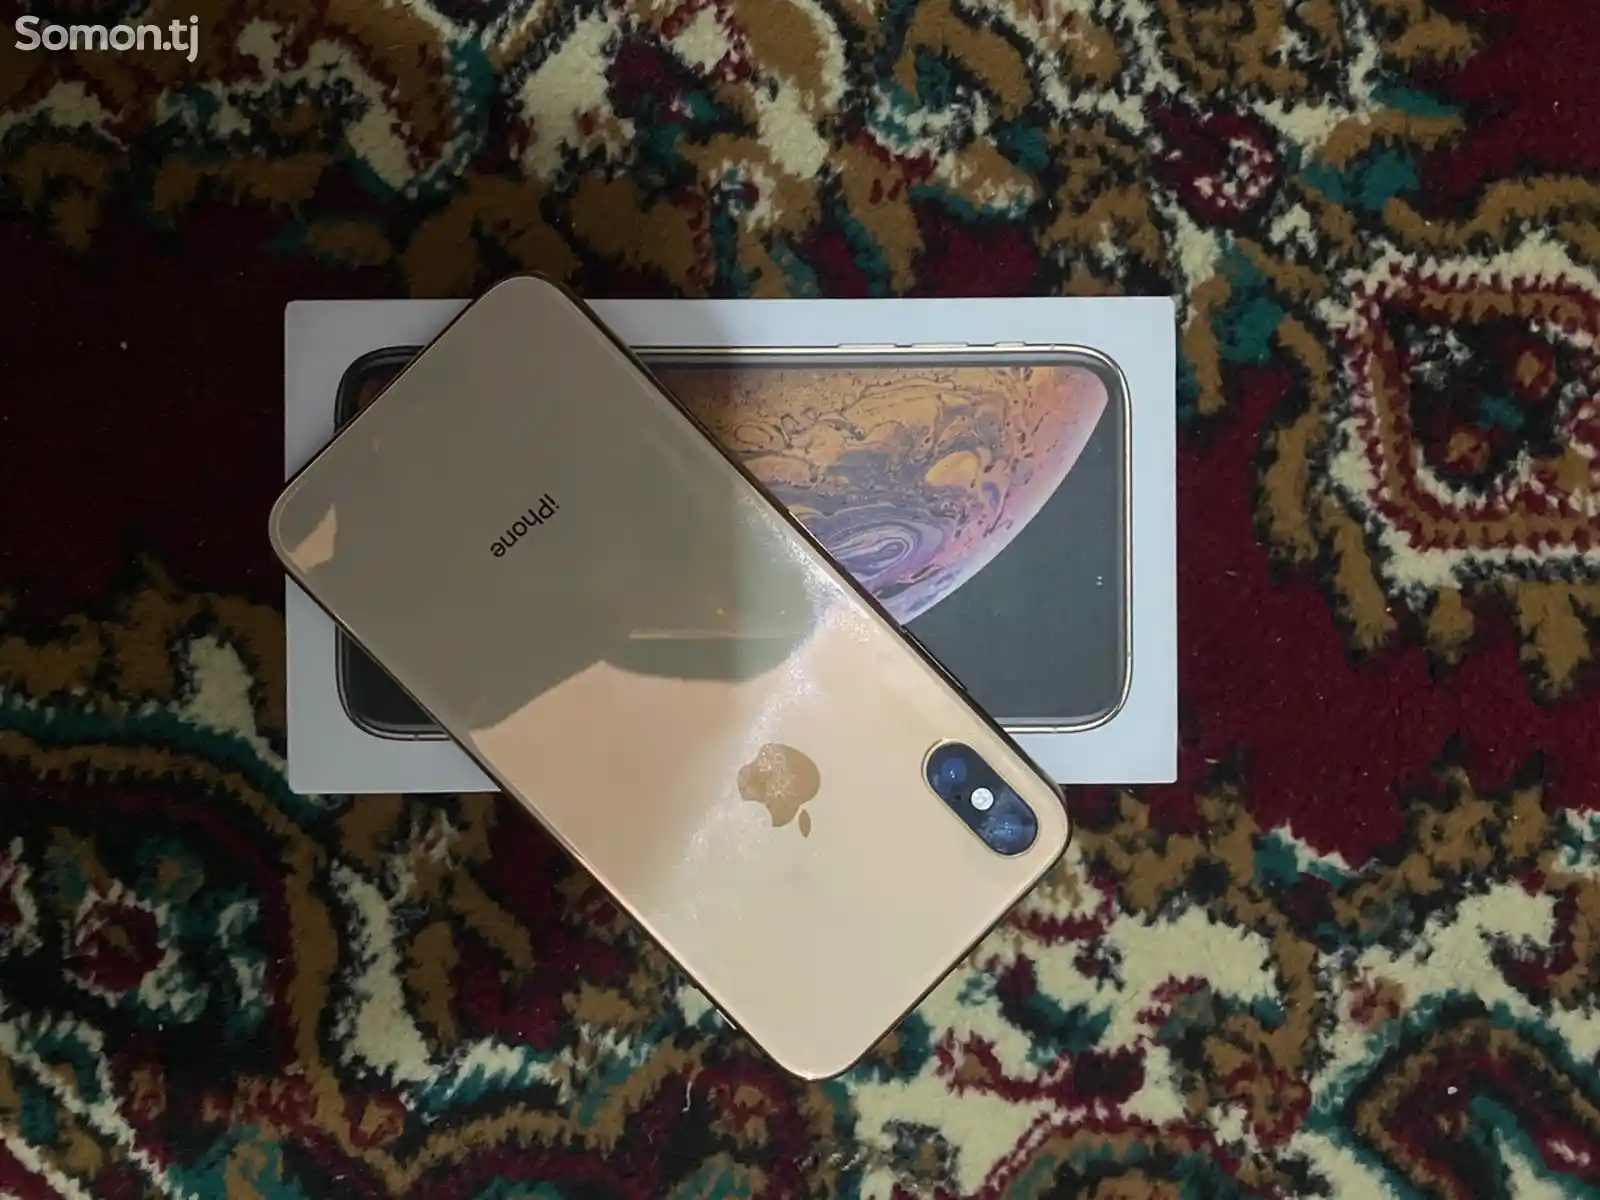 Apple iPhone Xs, 256 gb, Gold-1